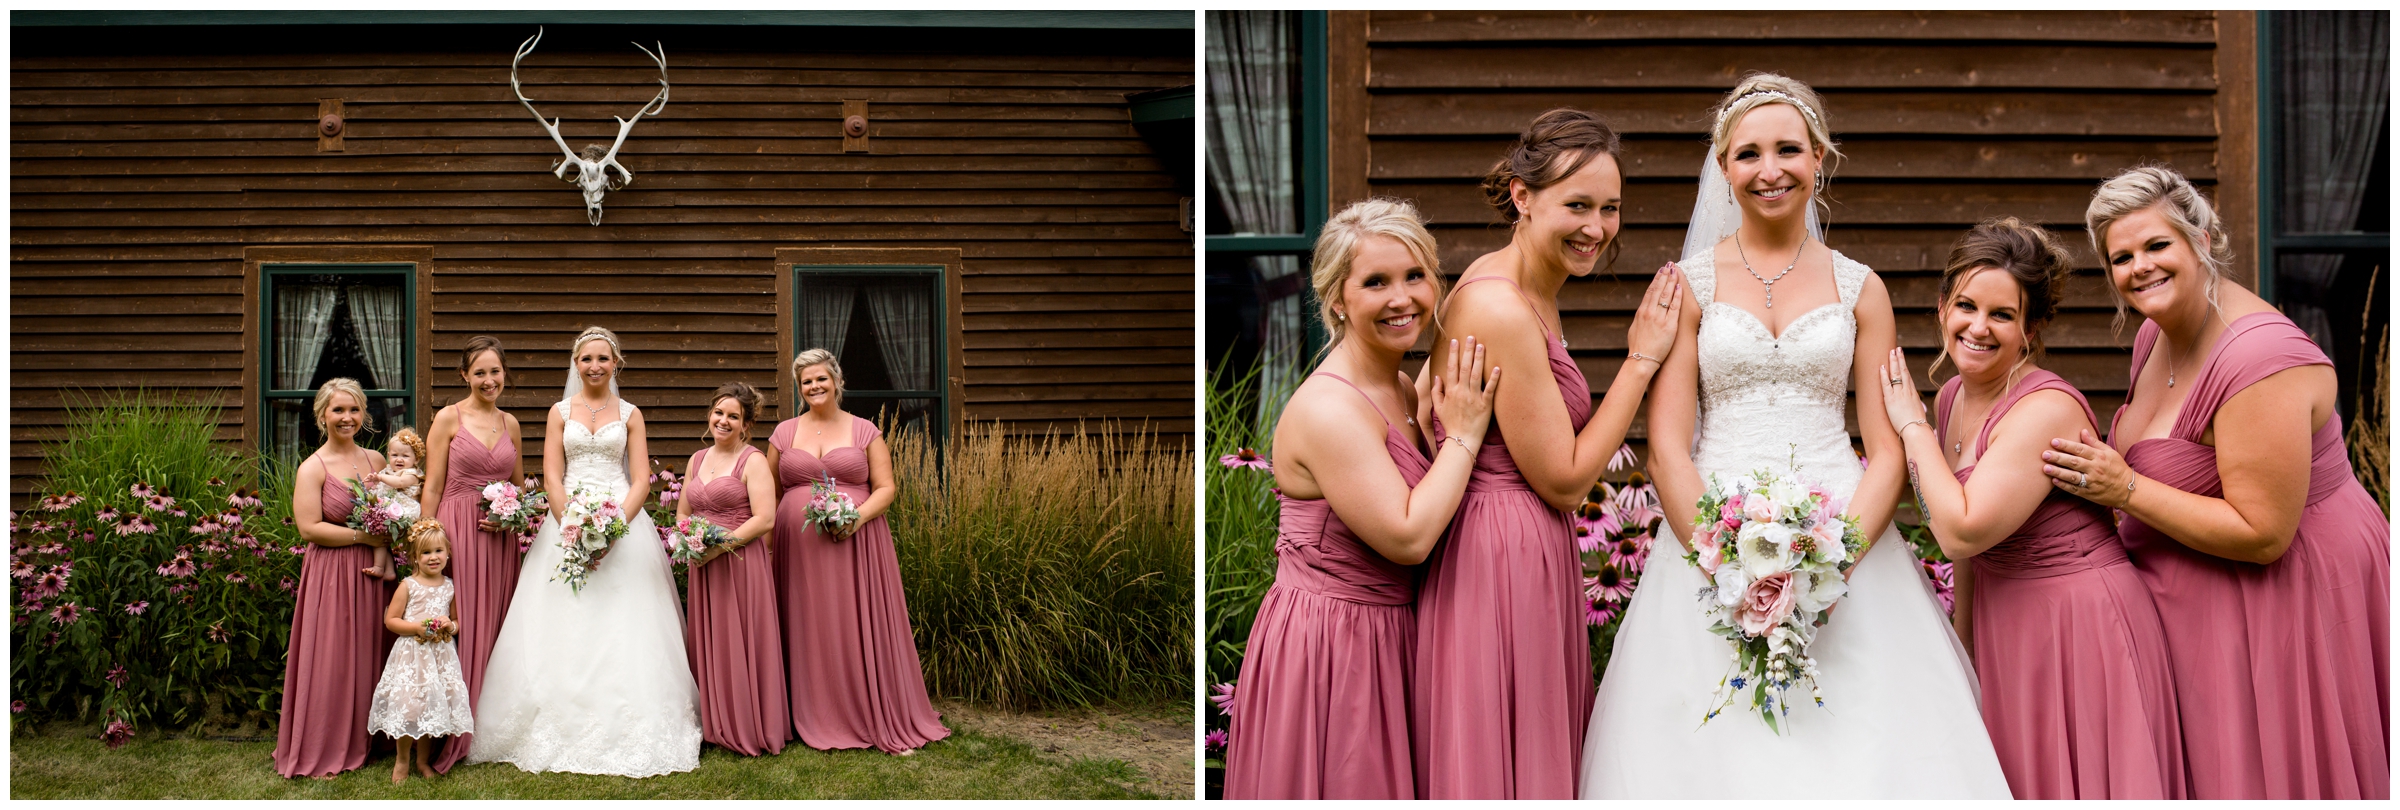 bridesmaids in mauve dresses posing in front of rustic lodge 